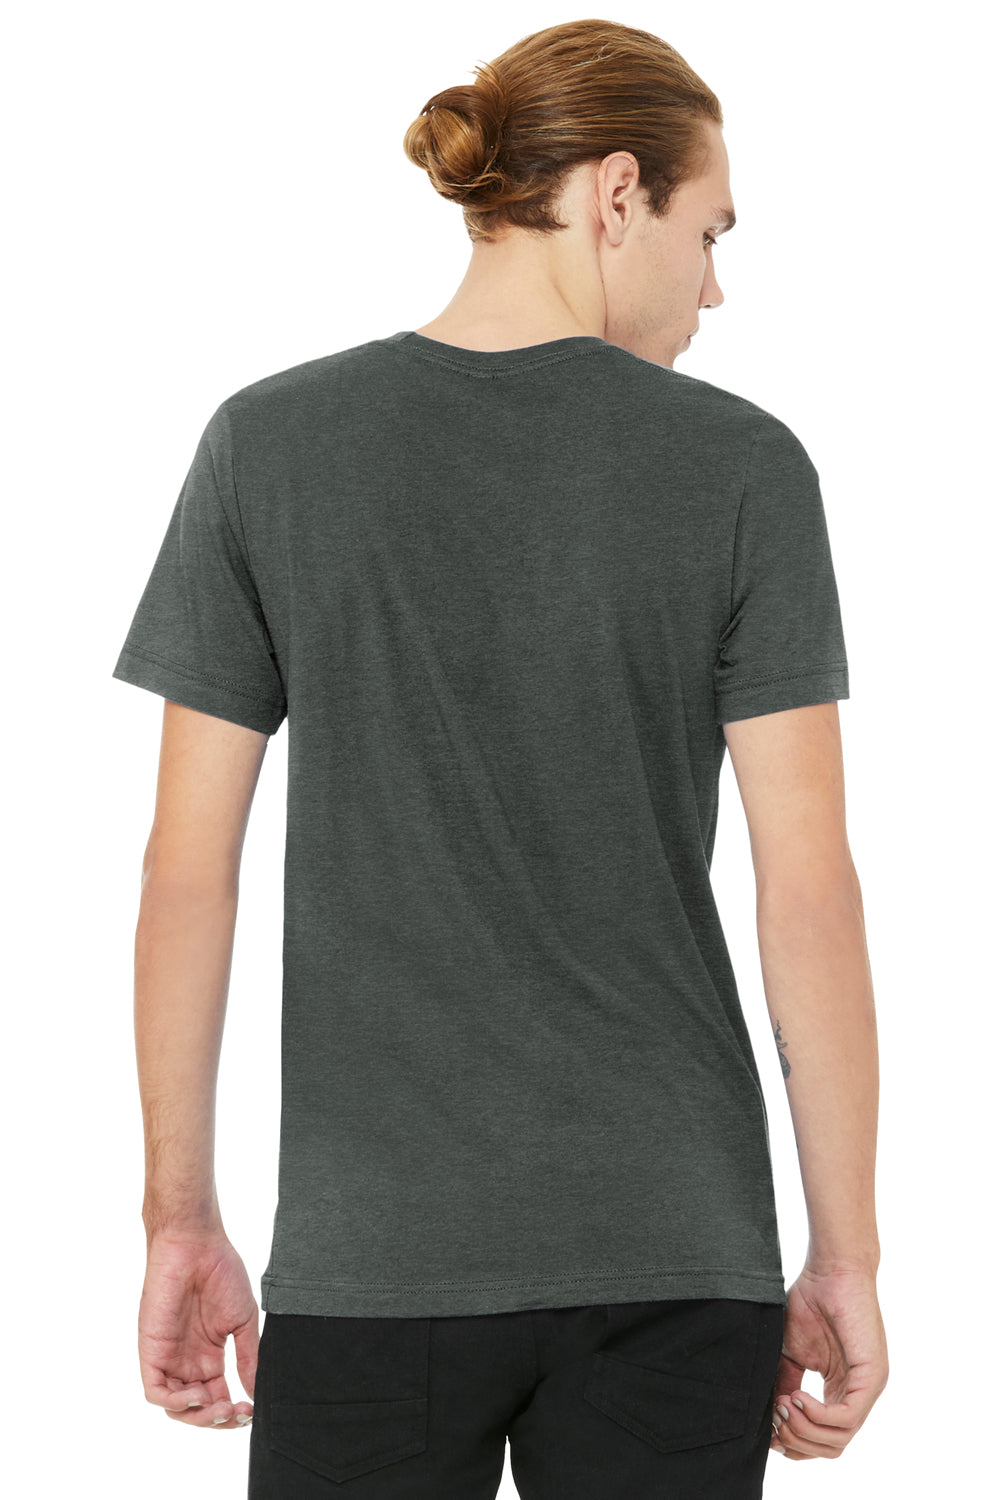 Bella + Canvas BC3005CVC Mens CVC Short Sleeve V-Neck T-Shirt Heather Deep Grey Model Back